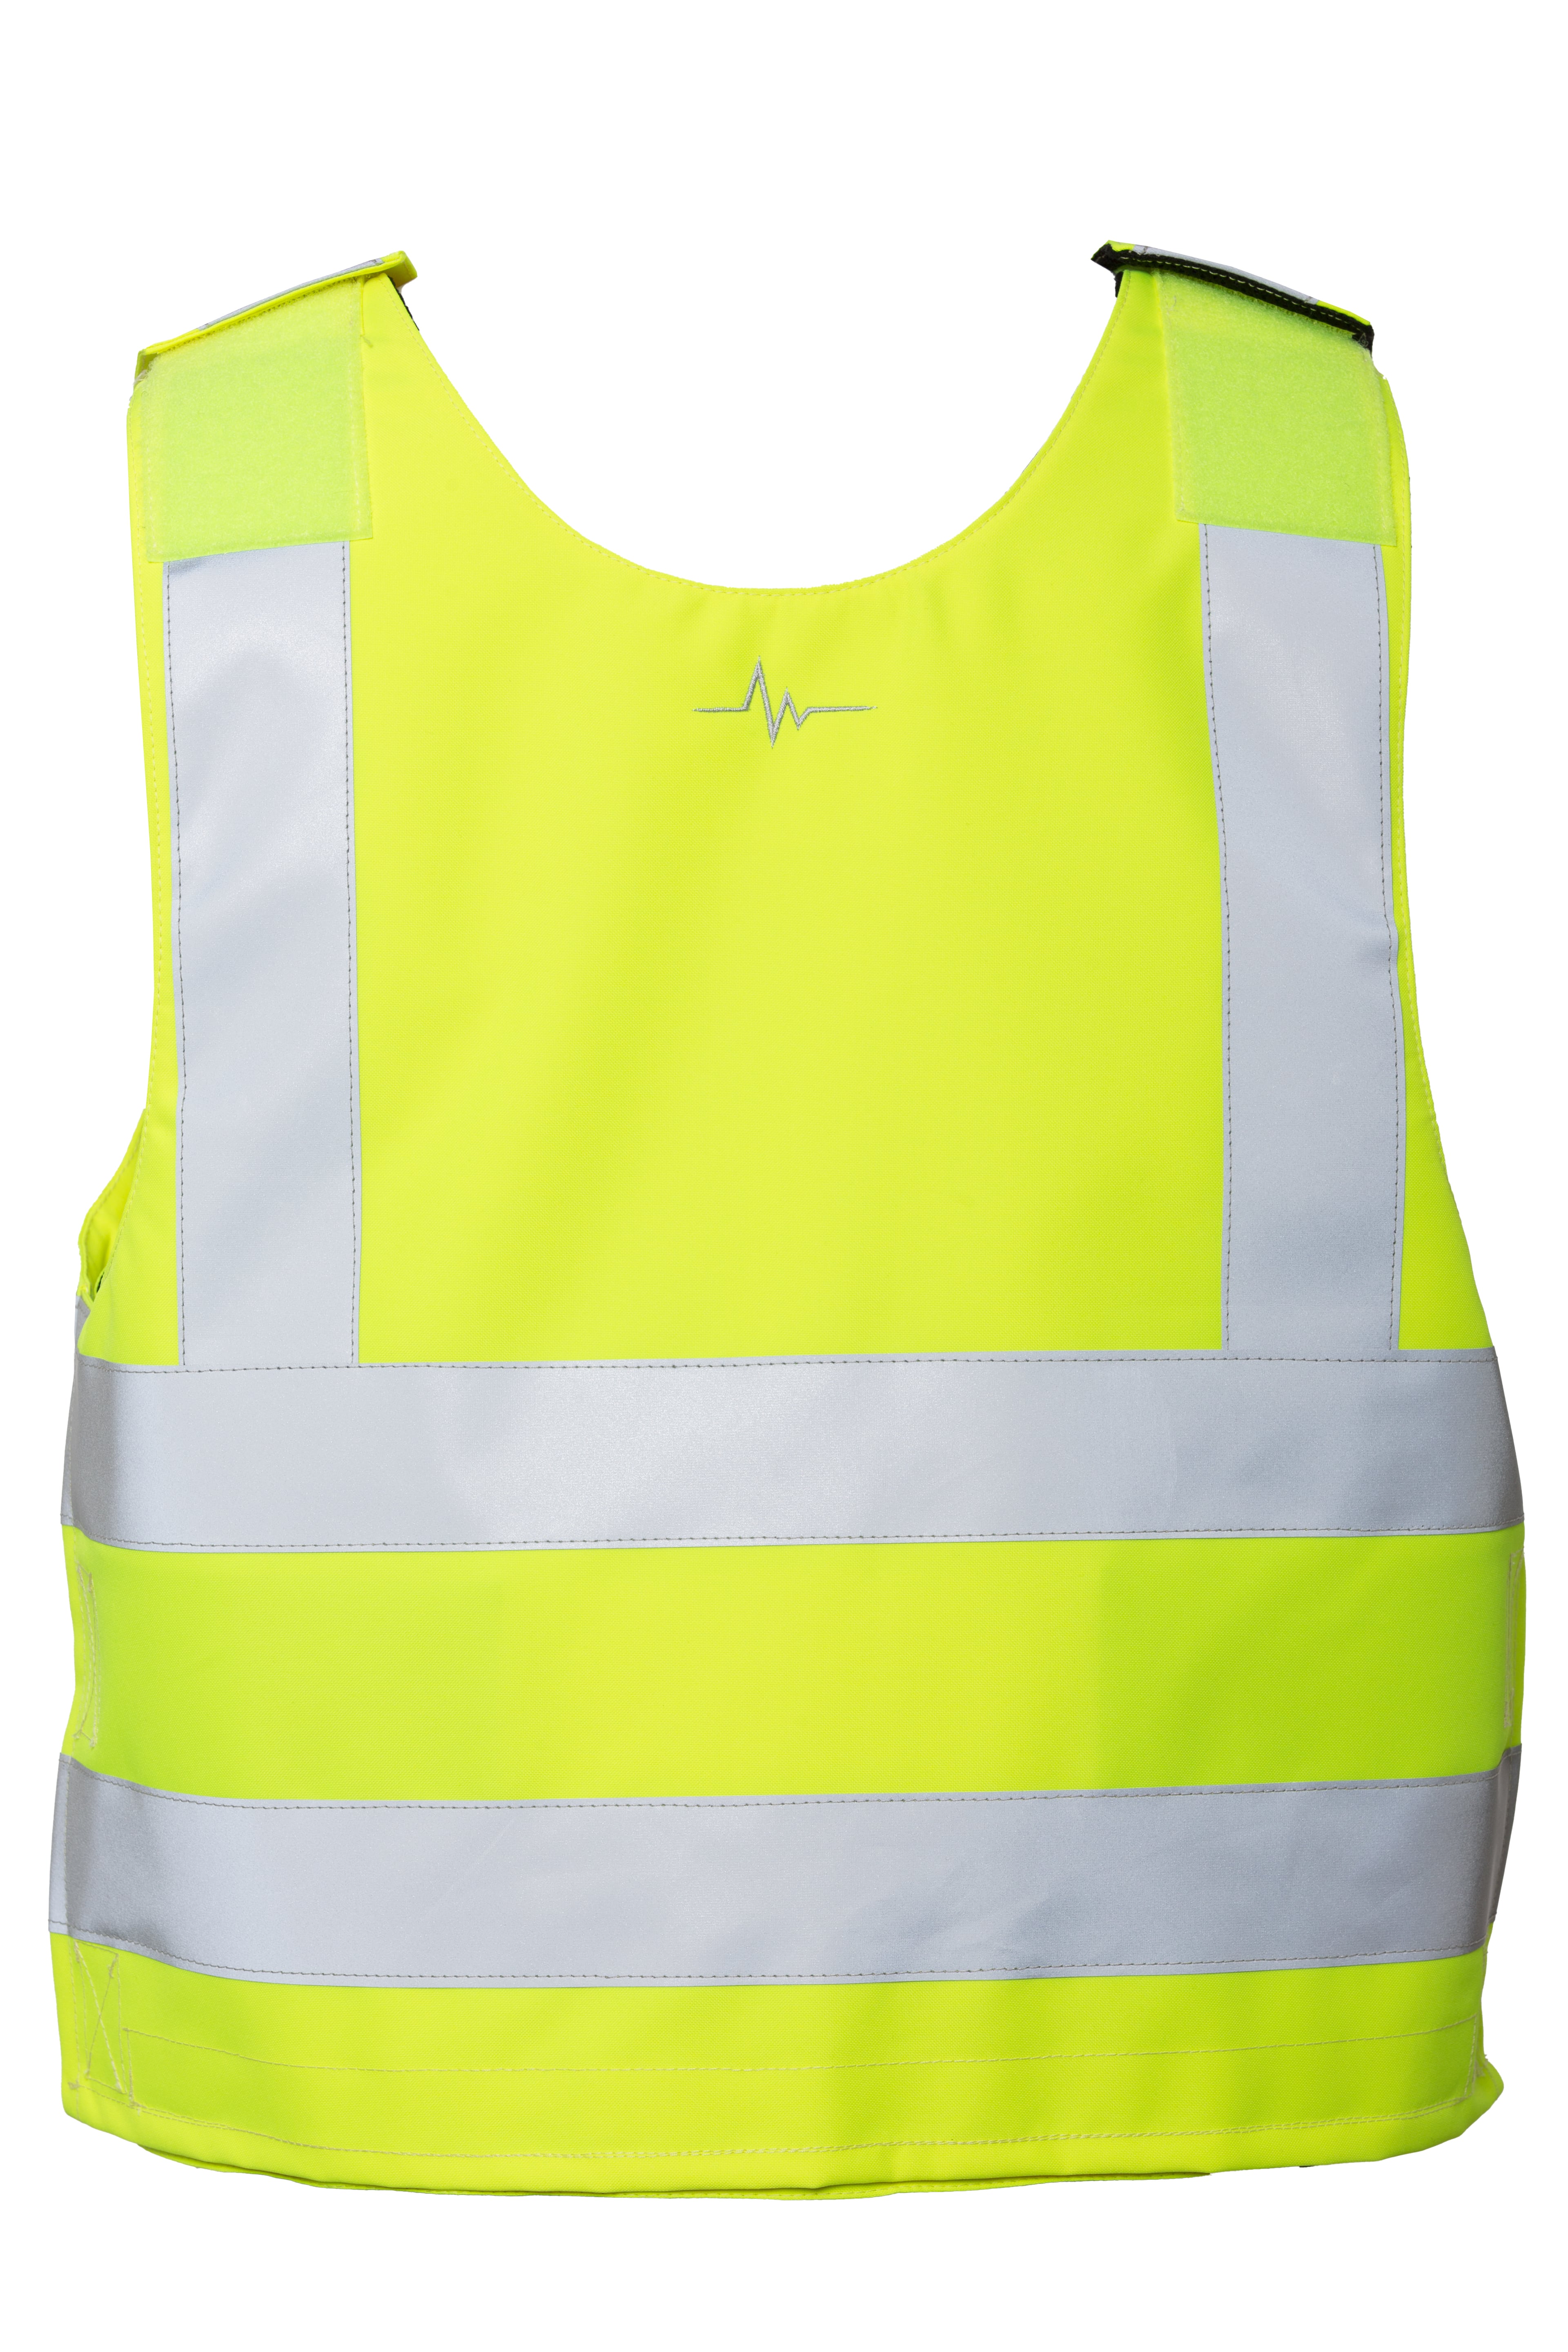 Rescuewear Weste 33655 für Engarde-Protektoren, Klasse 1 Enamelblau / Neon Gelb - XL